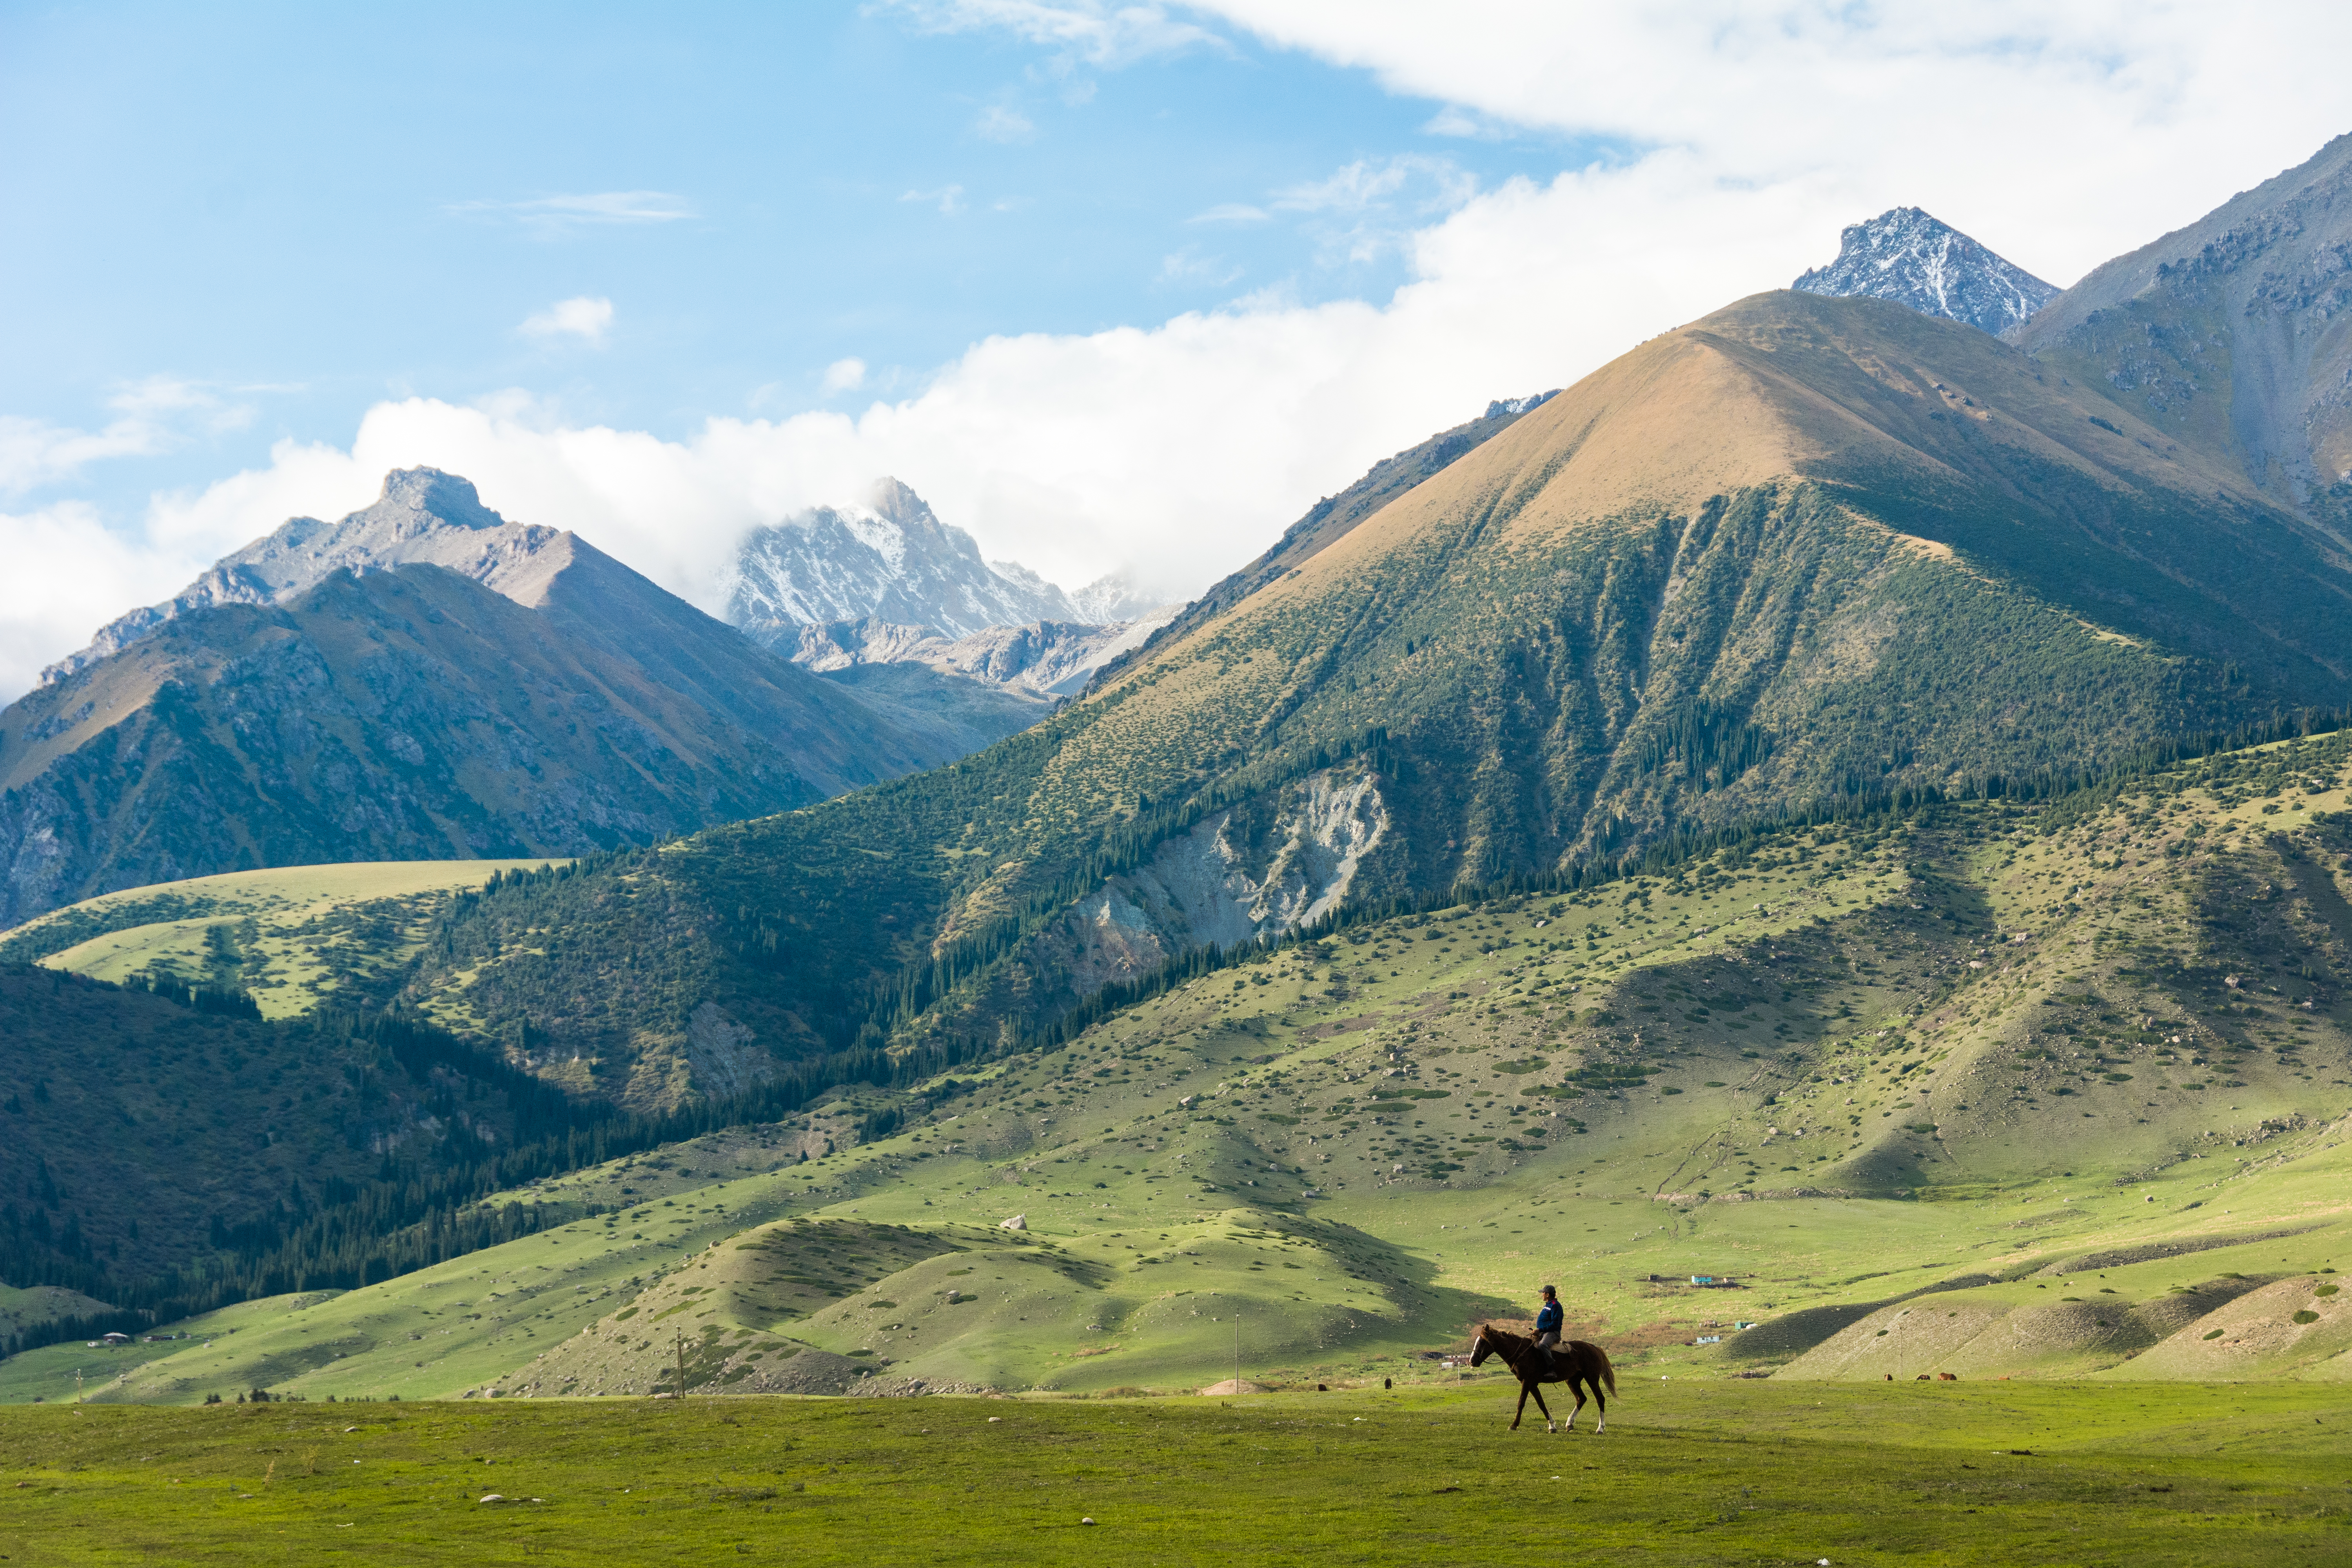 Kyrgyzstan's beautiful scenery